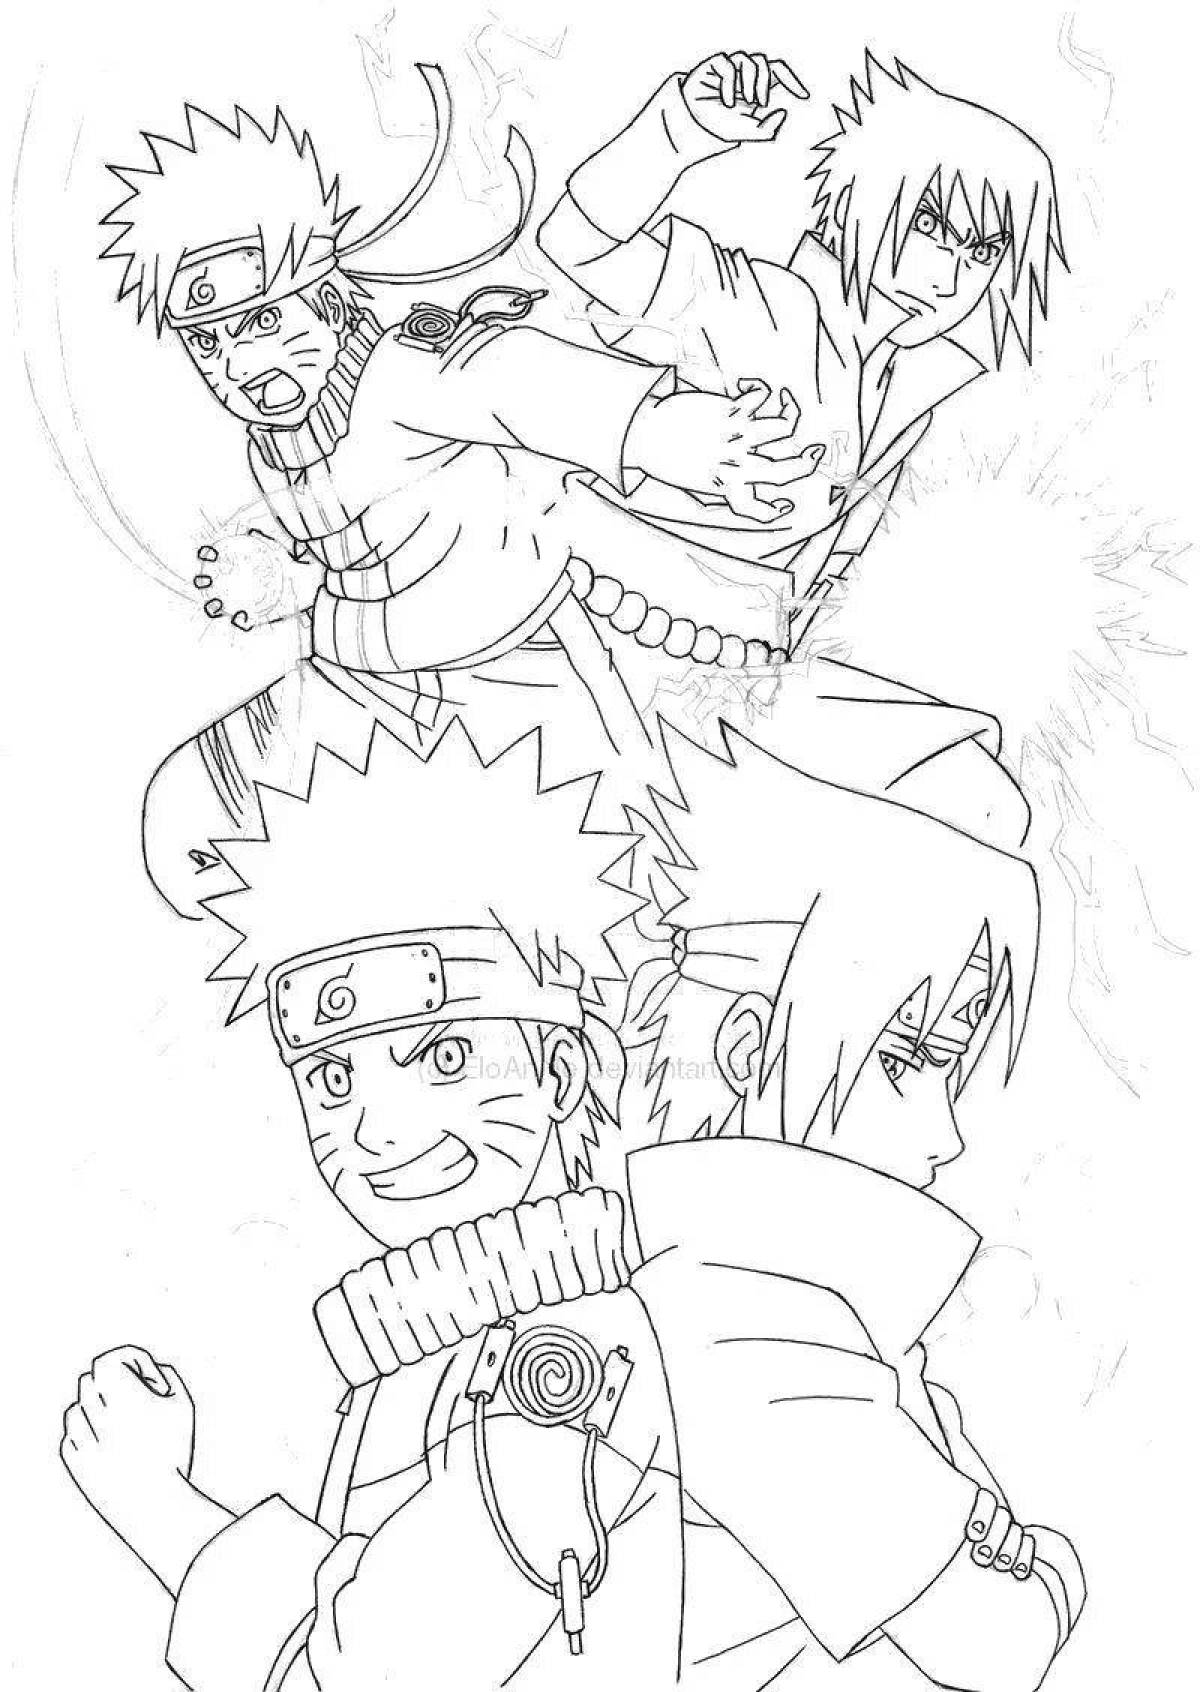 A colorfully illustrated naruto and sasuke coloring page